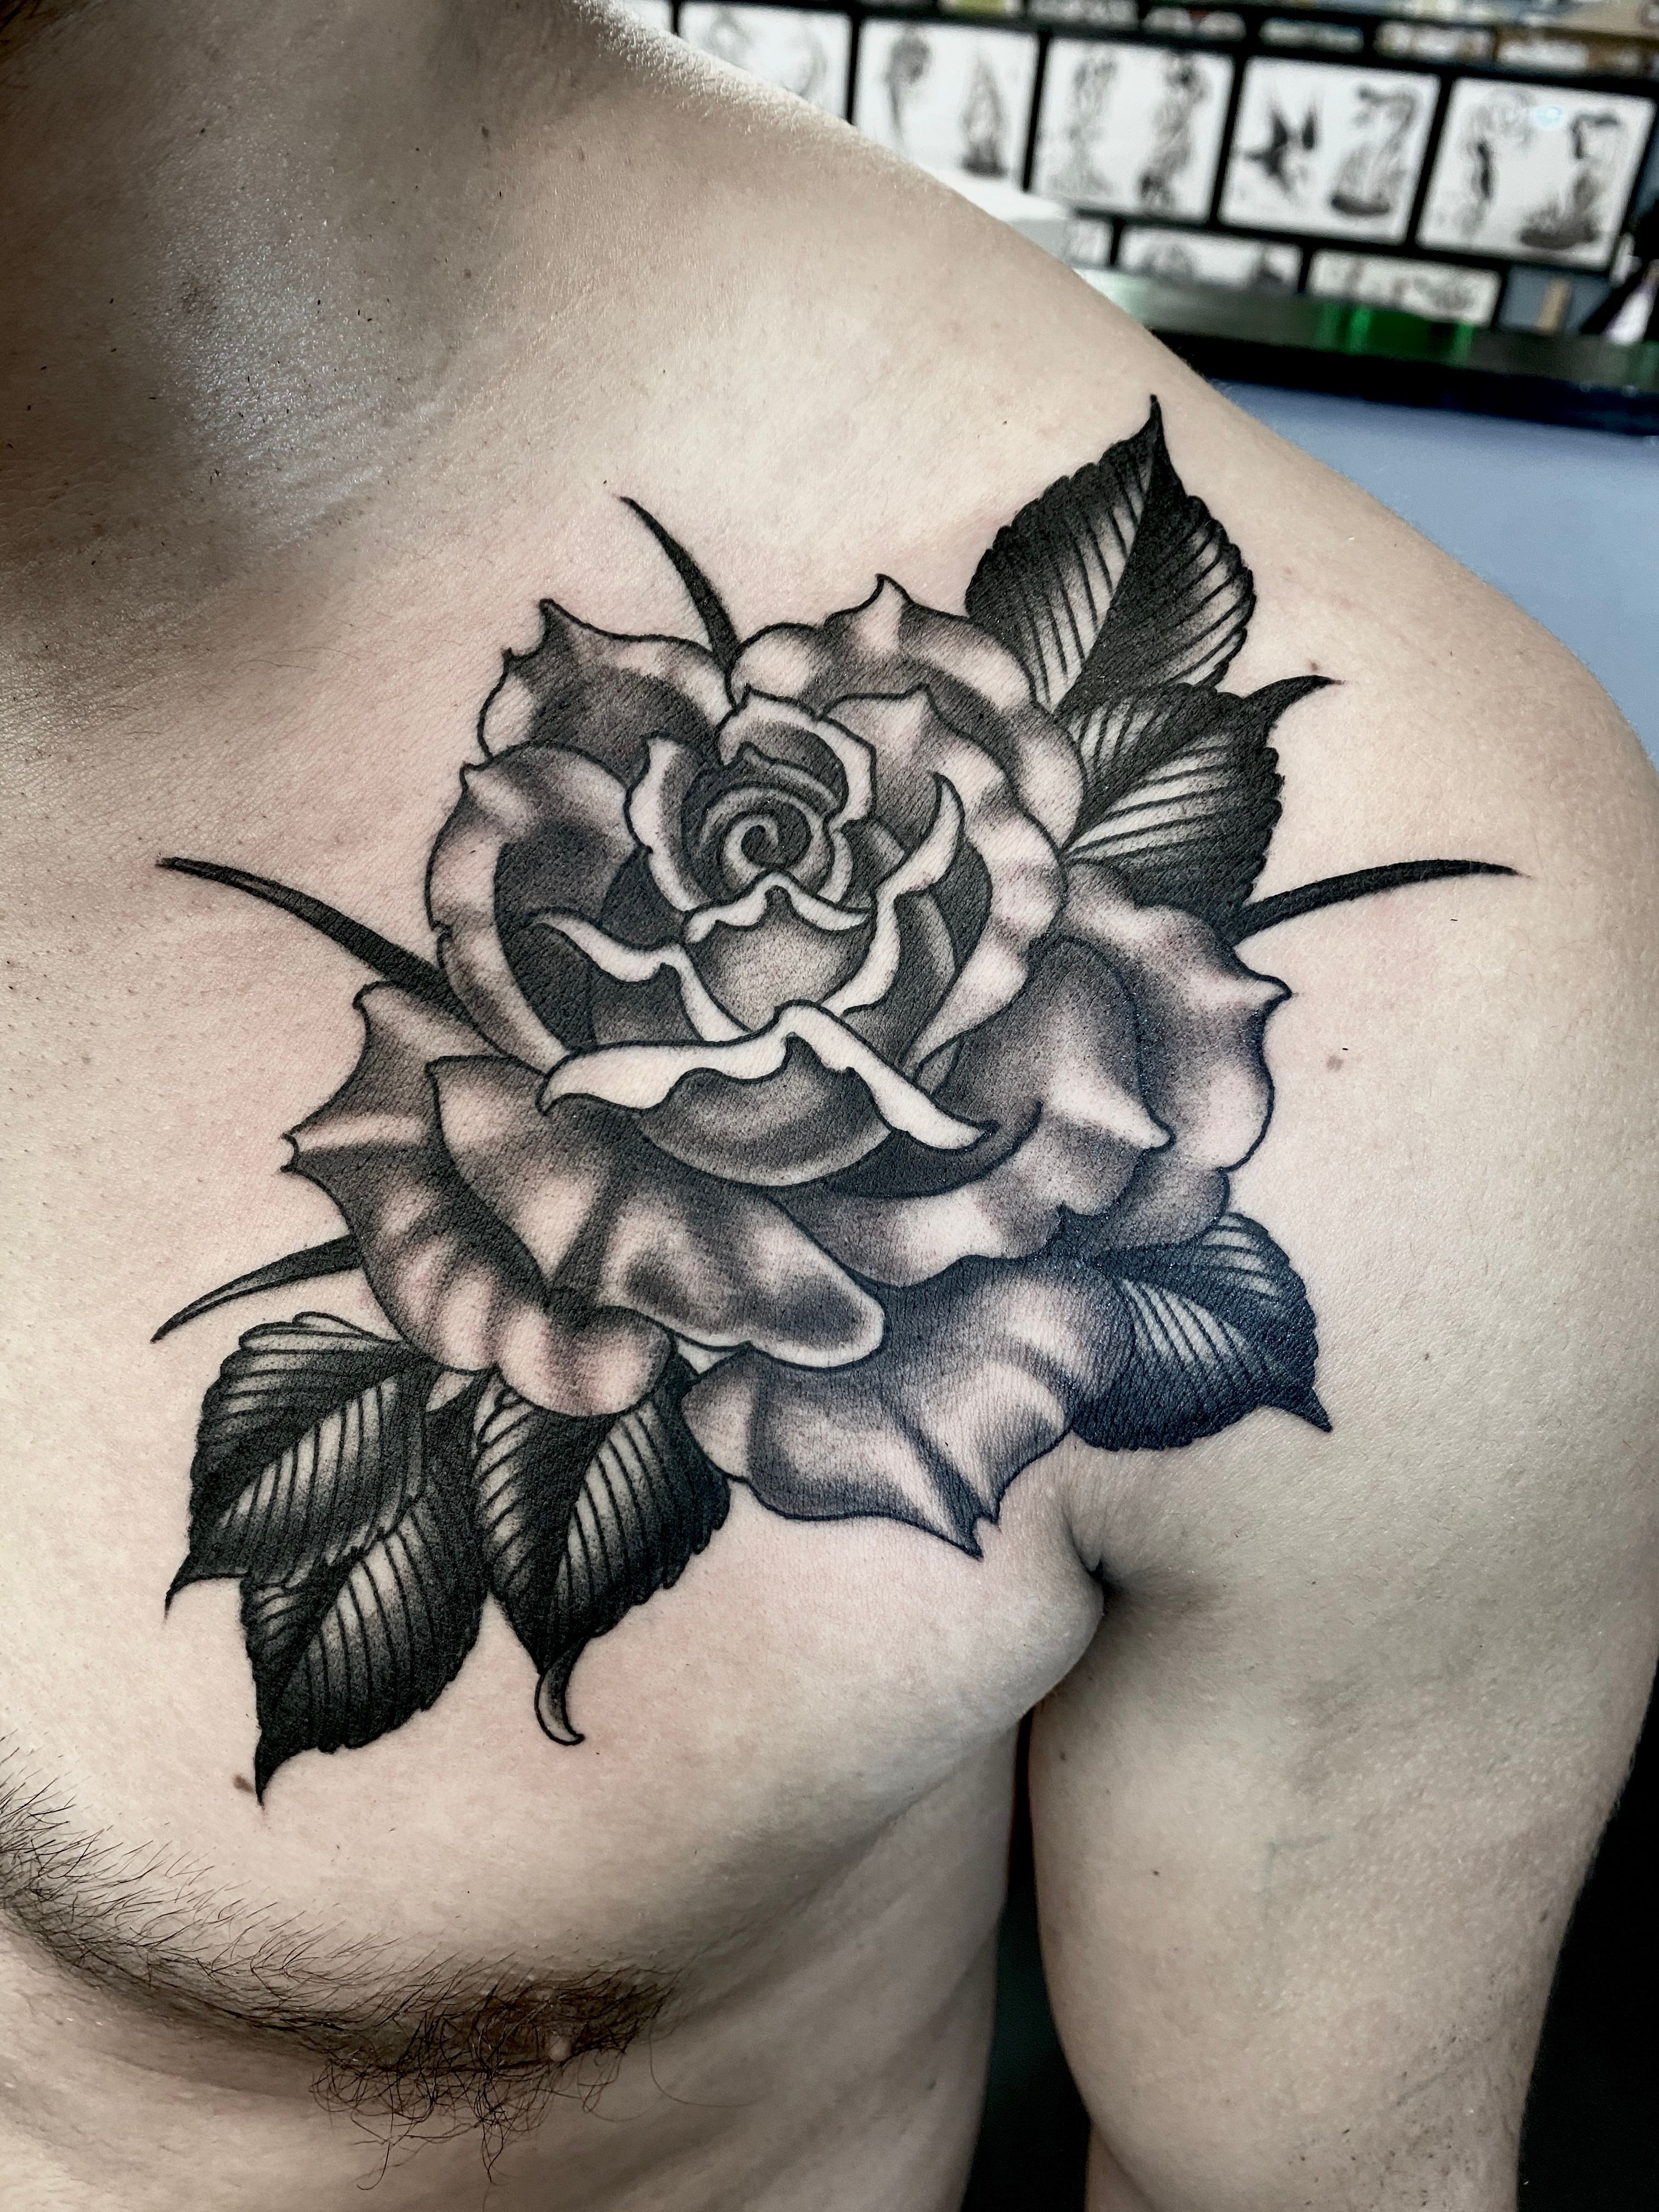 Flower tree tattoo by Simona Merlo | Post 28802